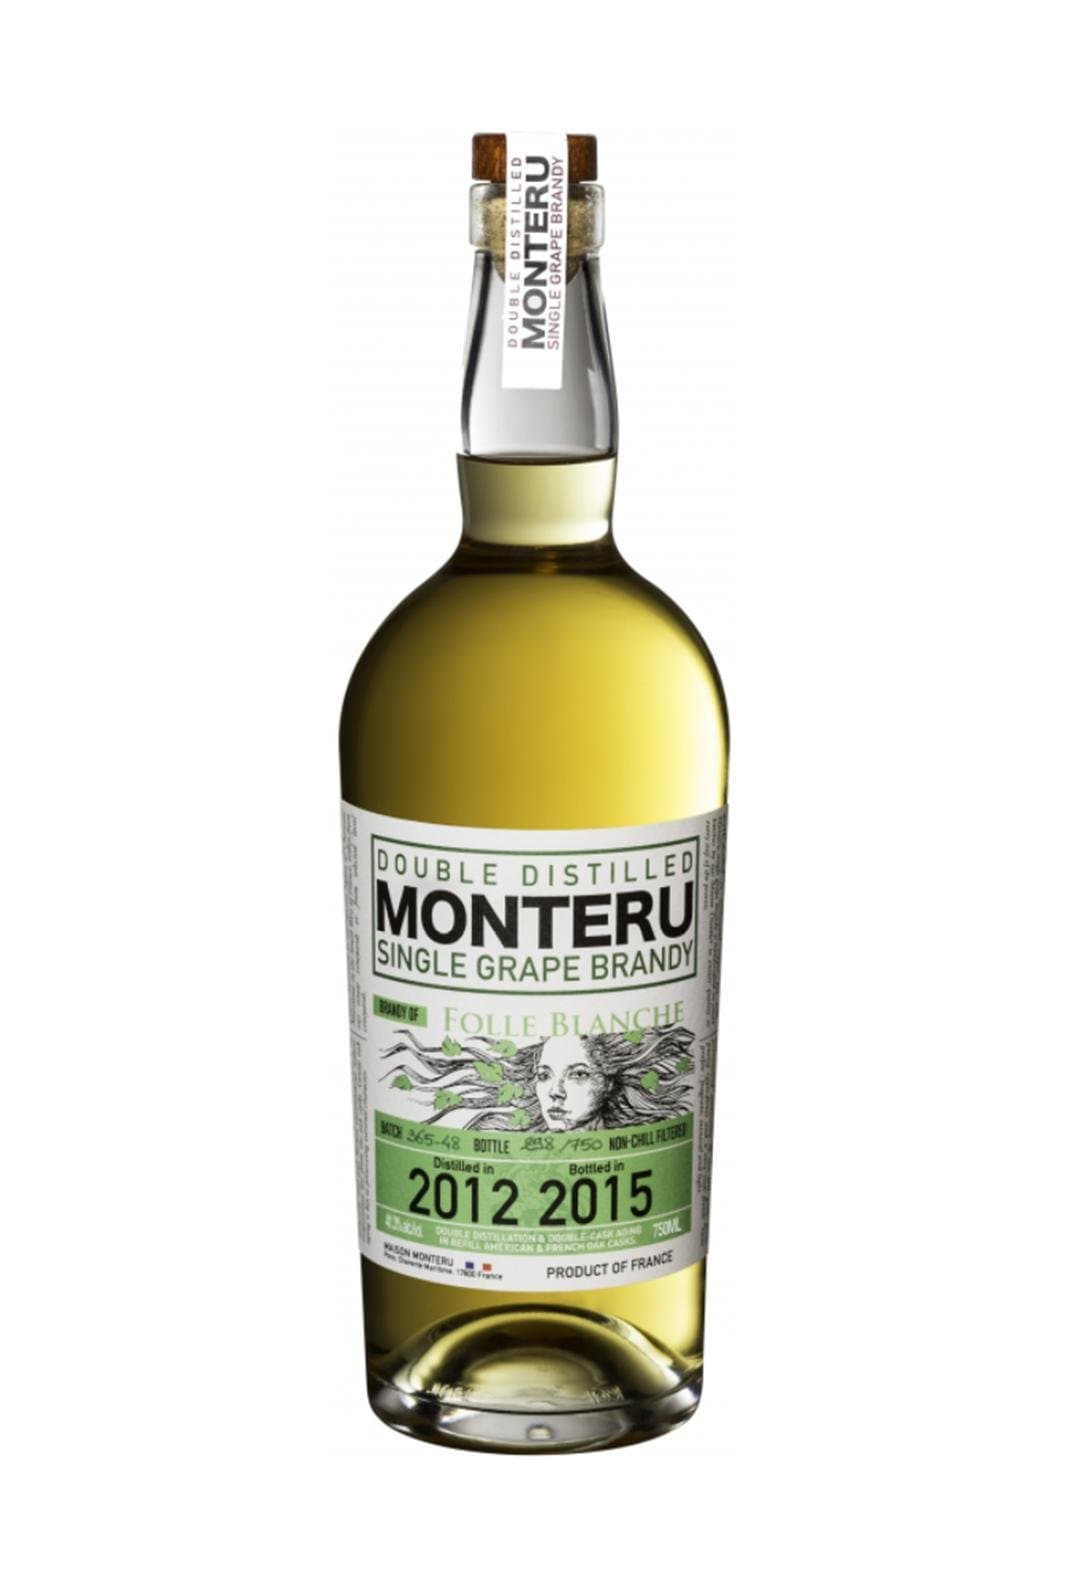 Naud Brandy Monteru Folle Blanche 41.3% 700ml | Liquor & Spirits | Shop online at Spirits of France